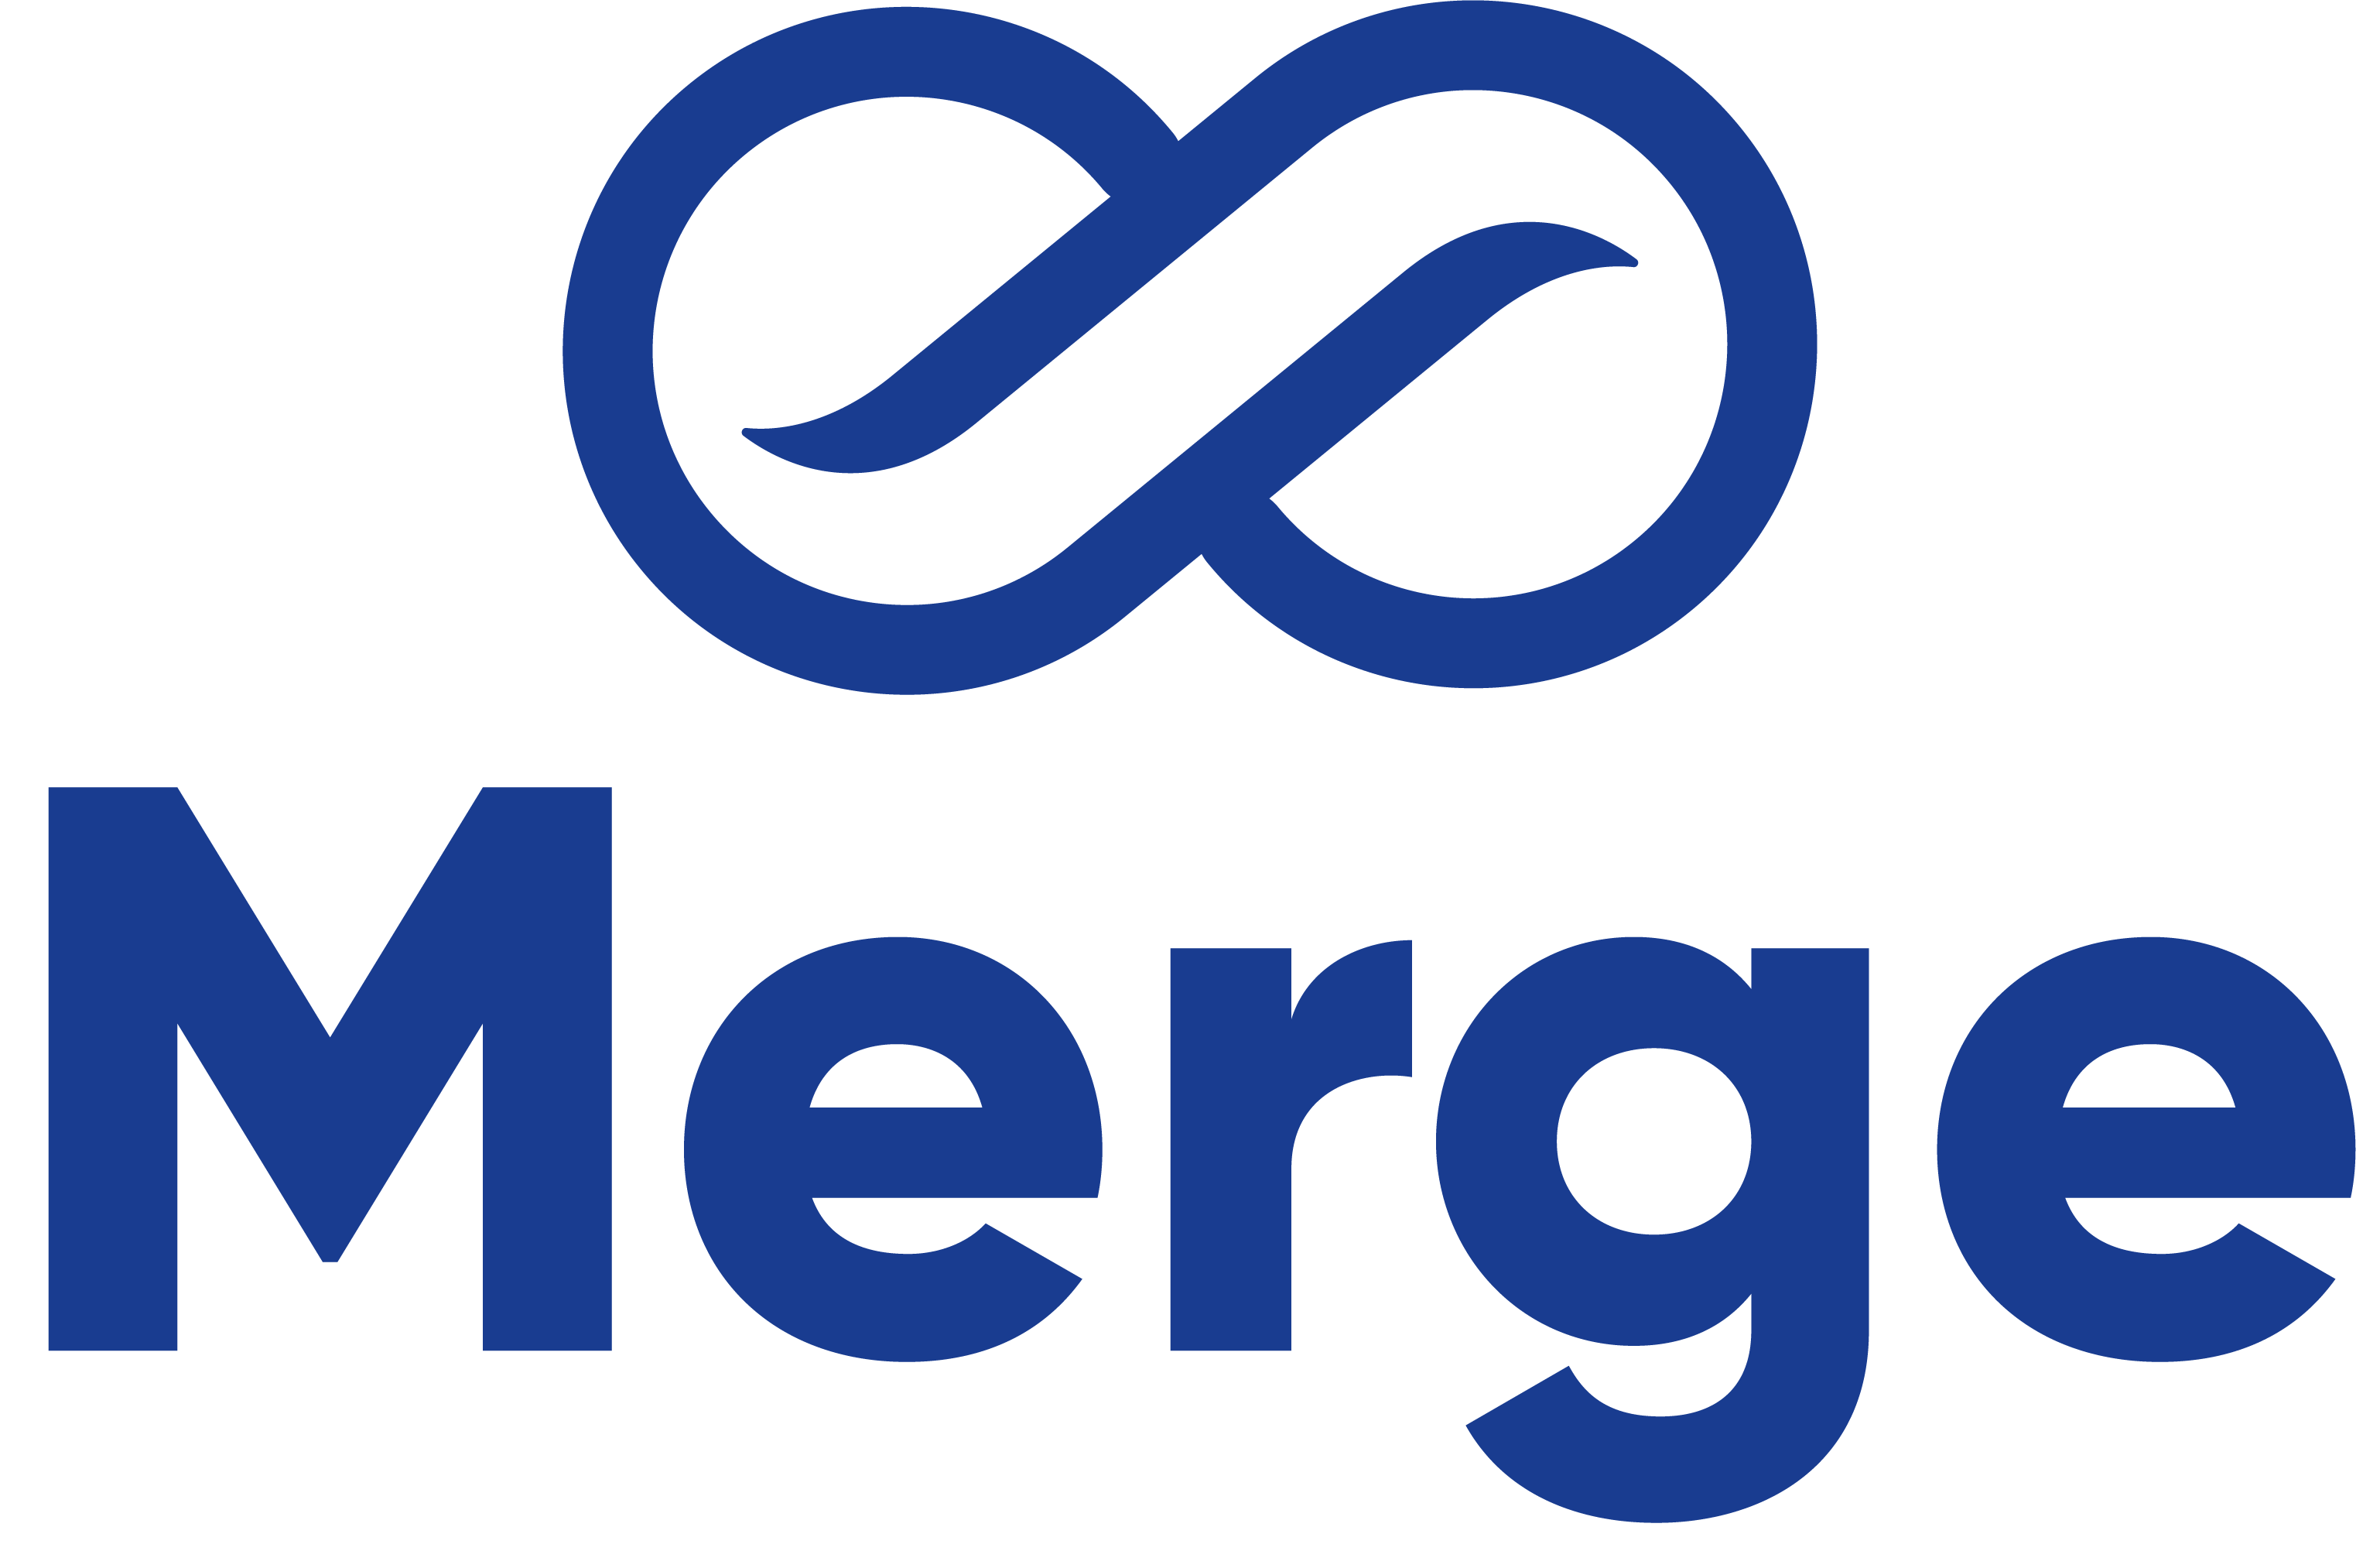 Merge Group